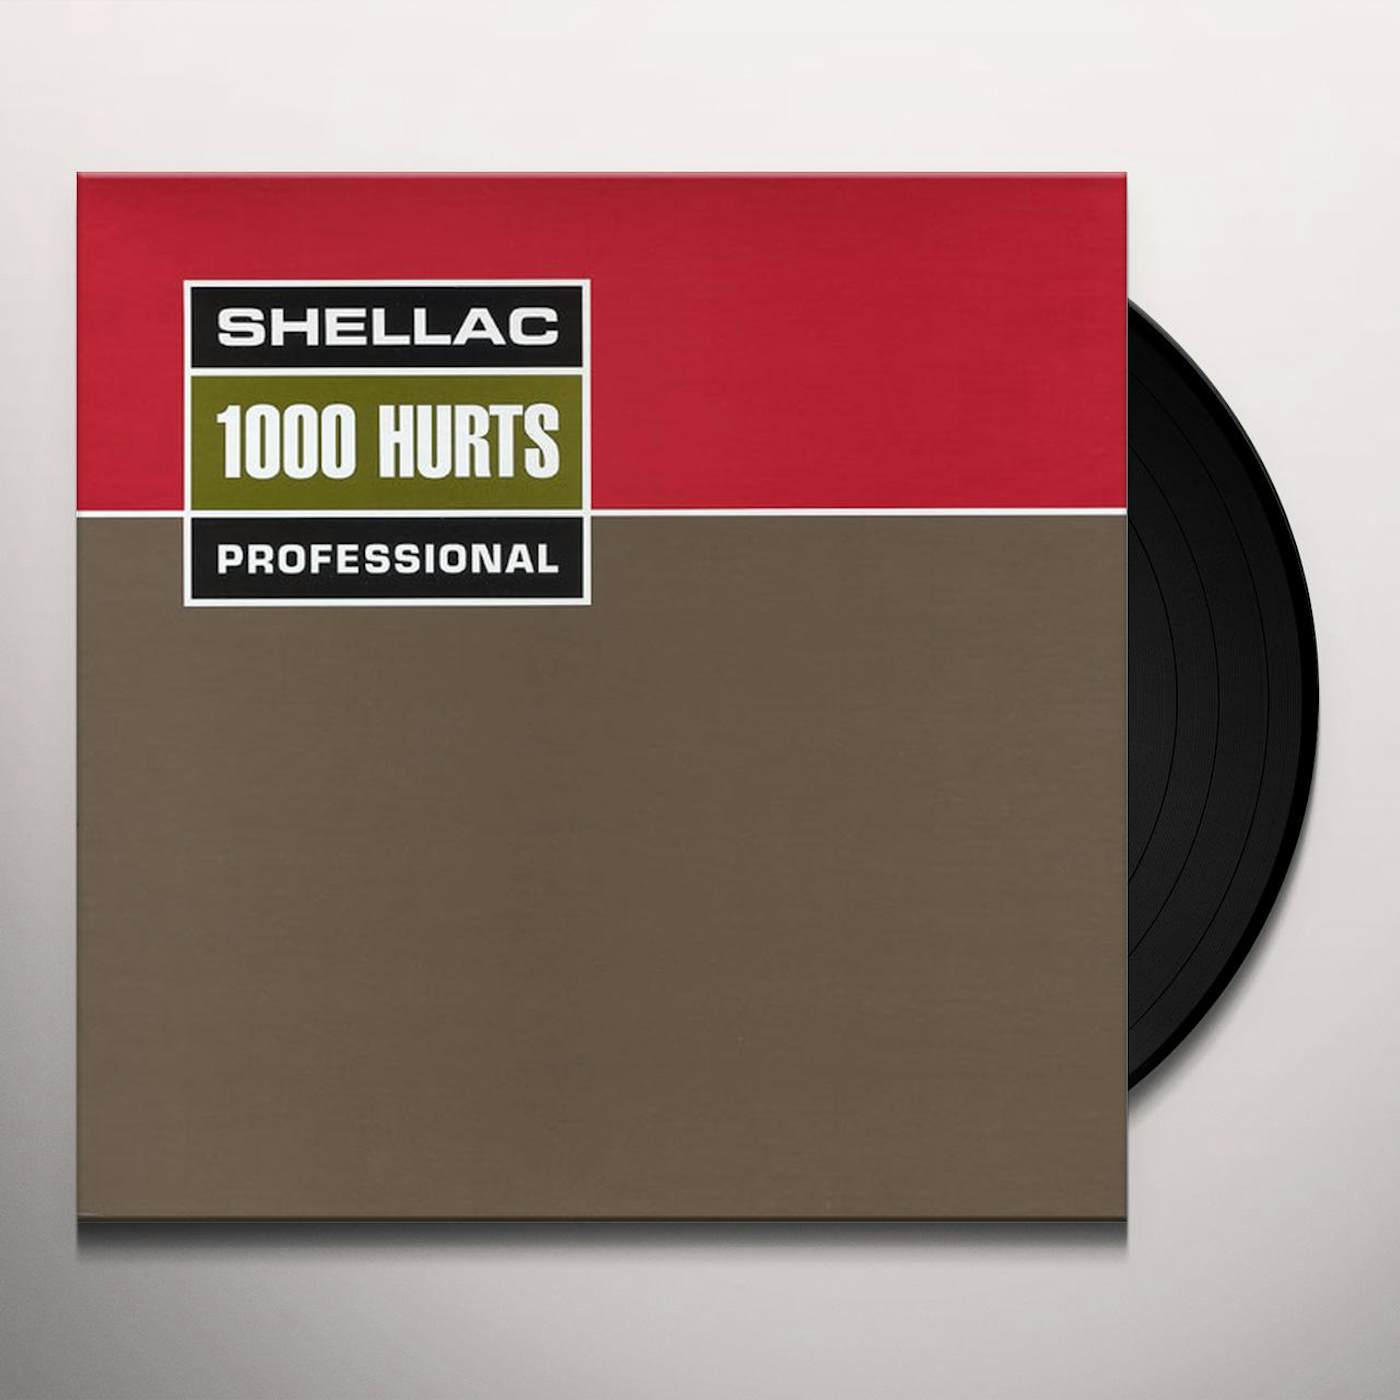 Shellac 1000 HURTS Vinyl Record